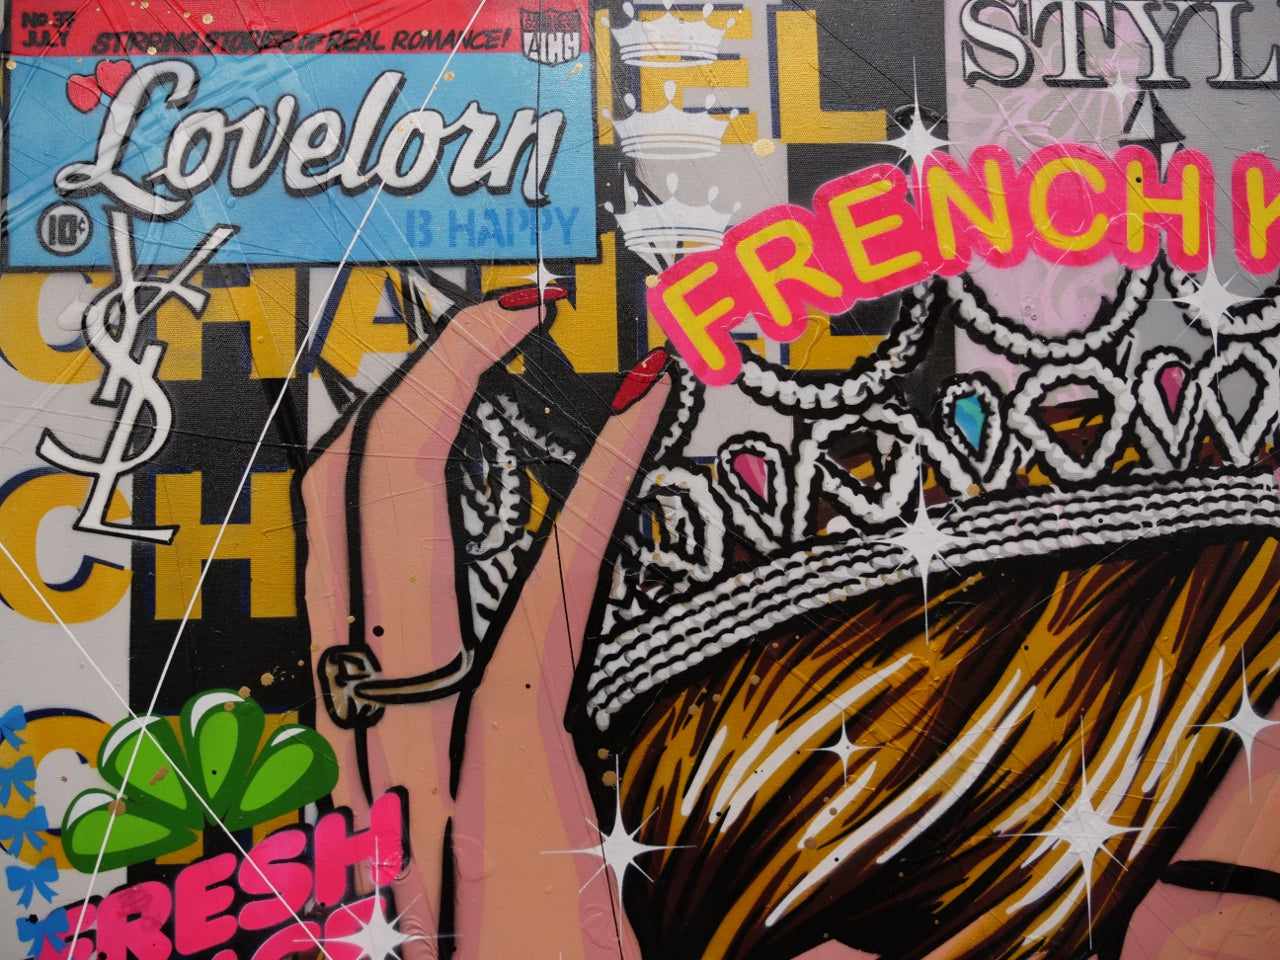 Candy Princess 140cm x 100cm Beauty Queen Textured Urban Pop Art Painting (SOLD)